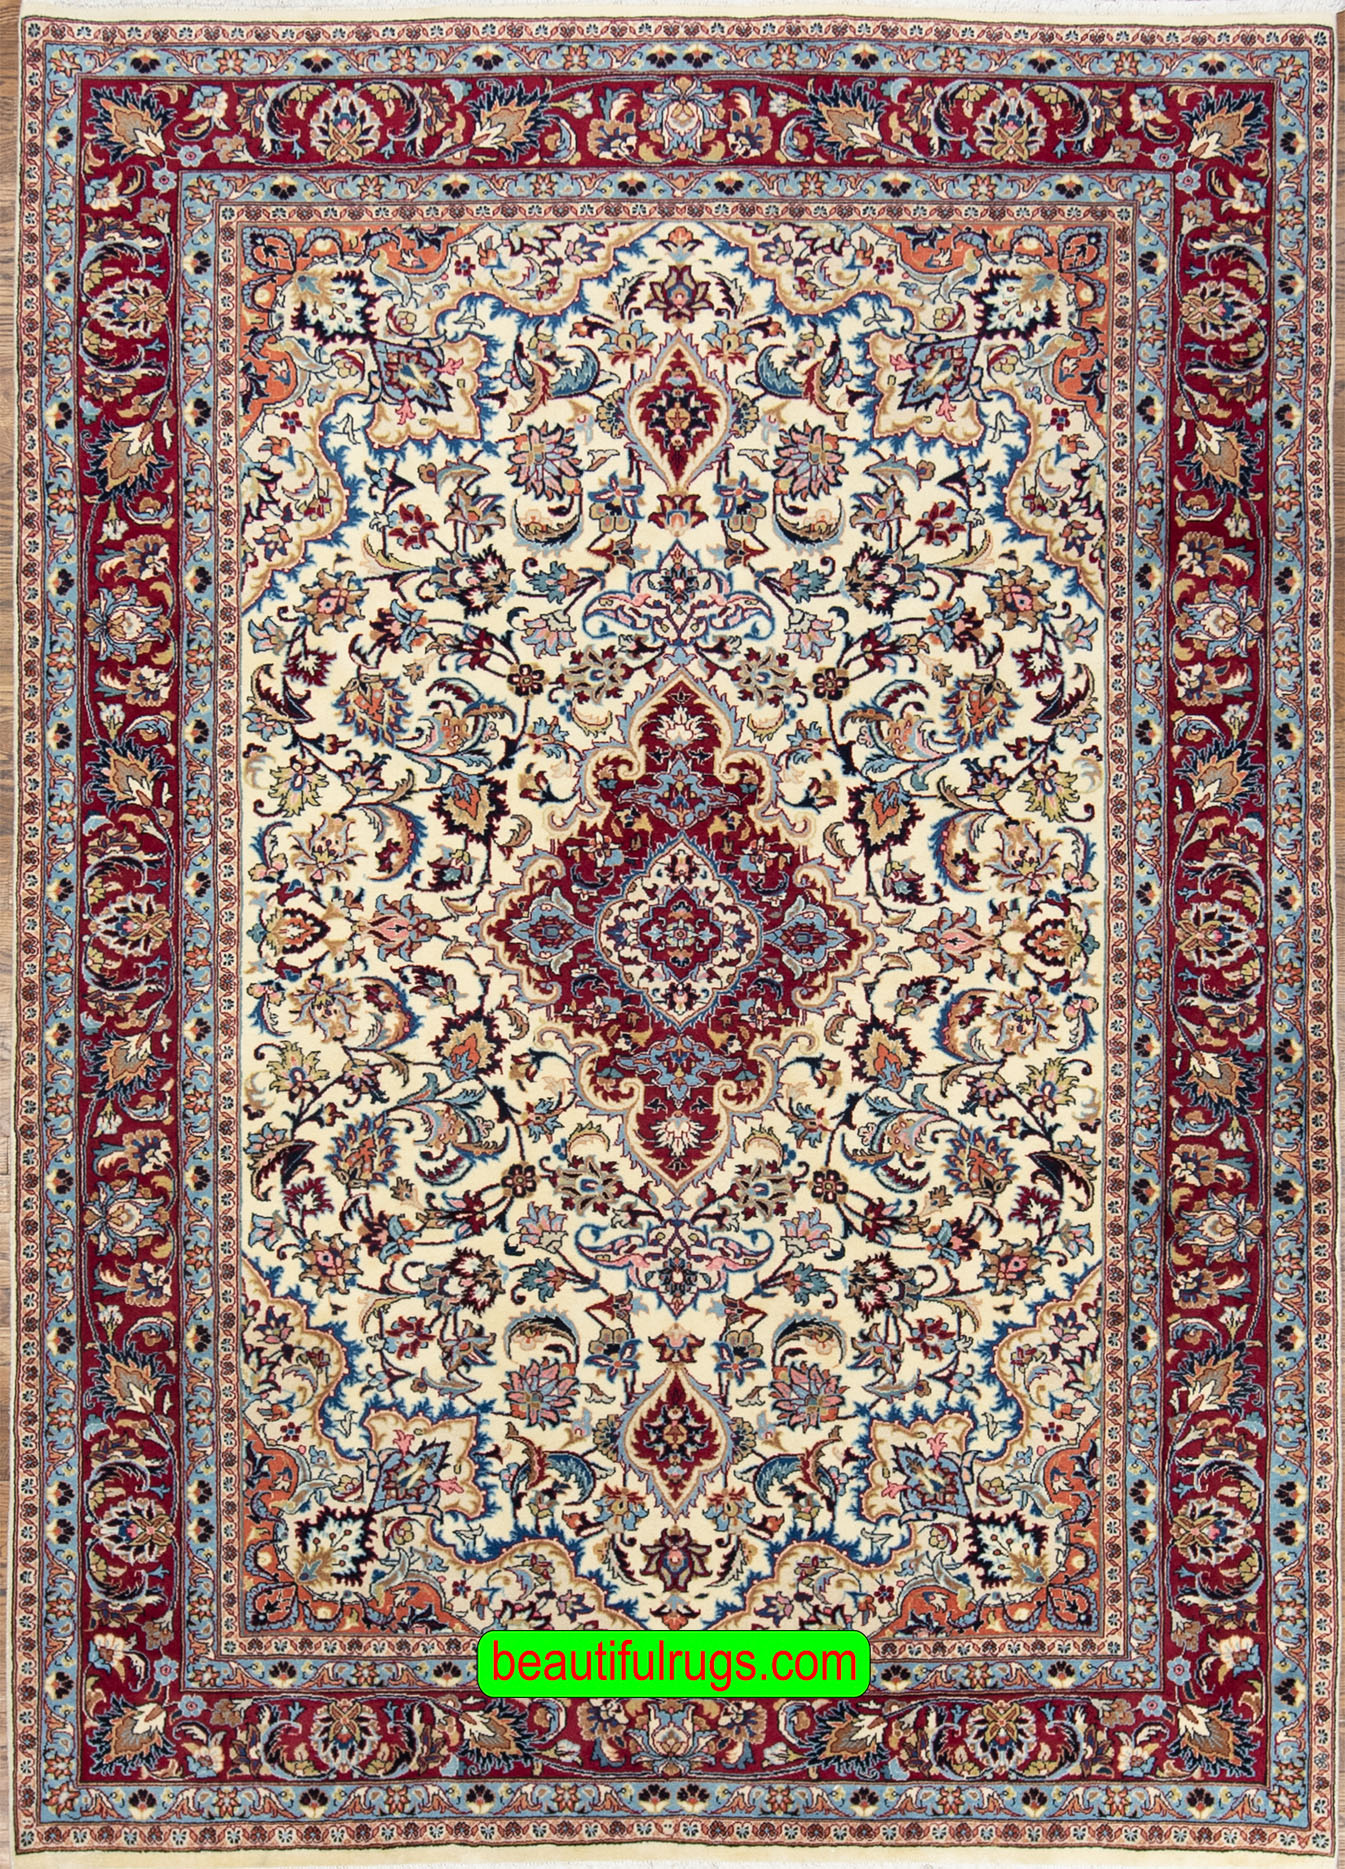 https://beautifulrugs.com/wp-content/uploads/2023/06/2555-Iranian-Carpet-Hand-Knotted-Mashad-Carpet-from-Iran-.jpg